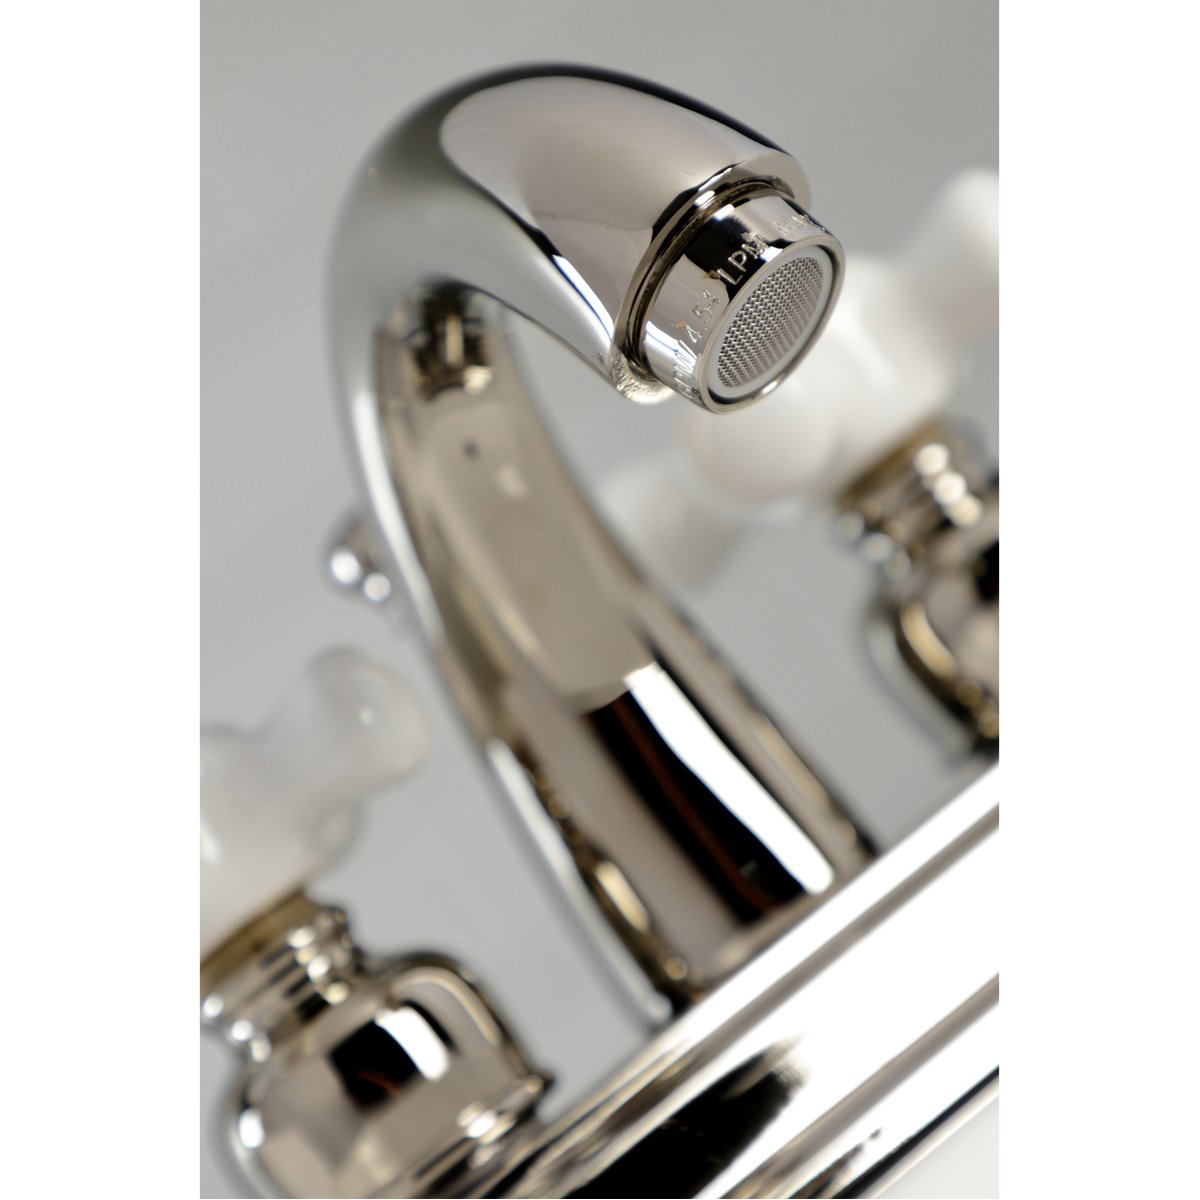 Kingston Brass Restoration 4-Inch Centerset Deck Mount Bathroom Faucet